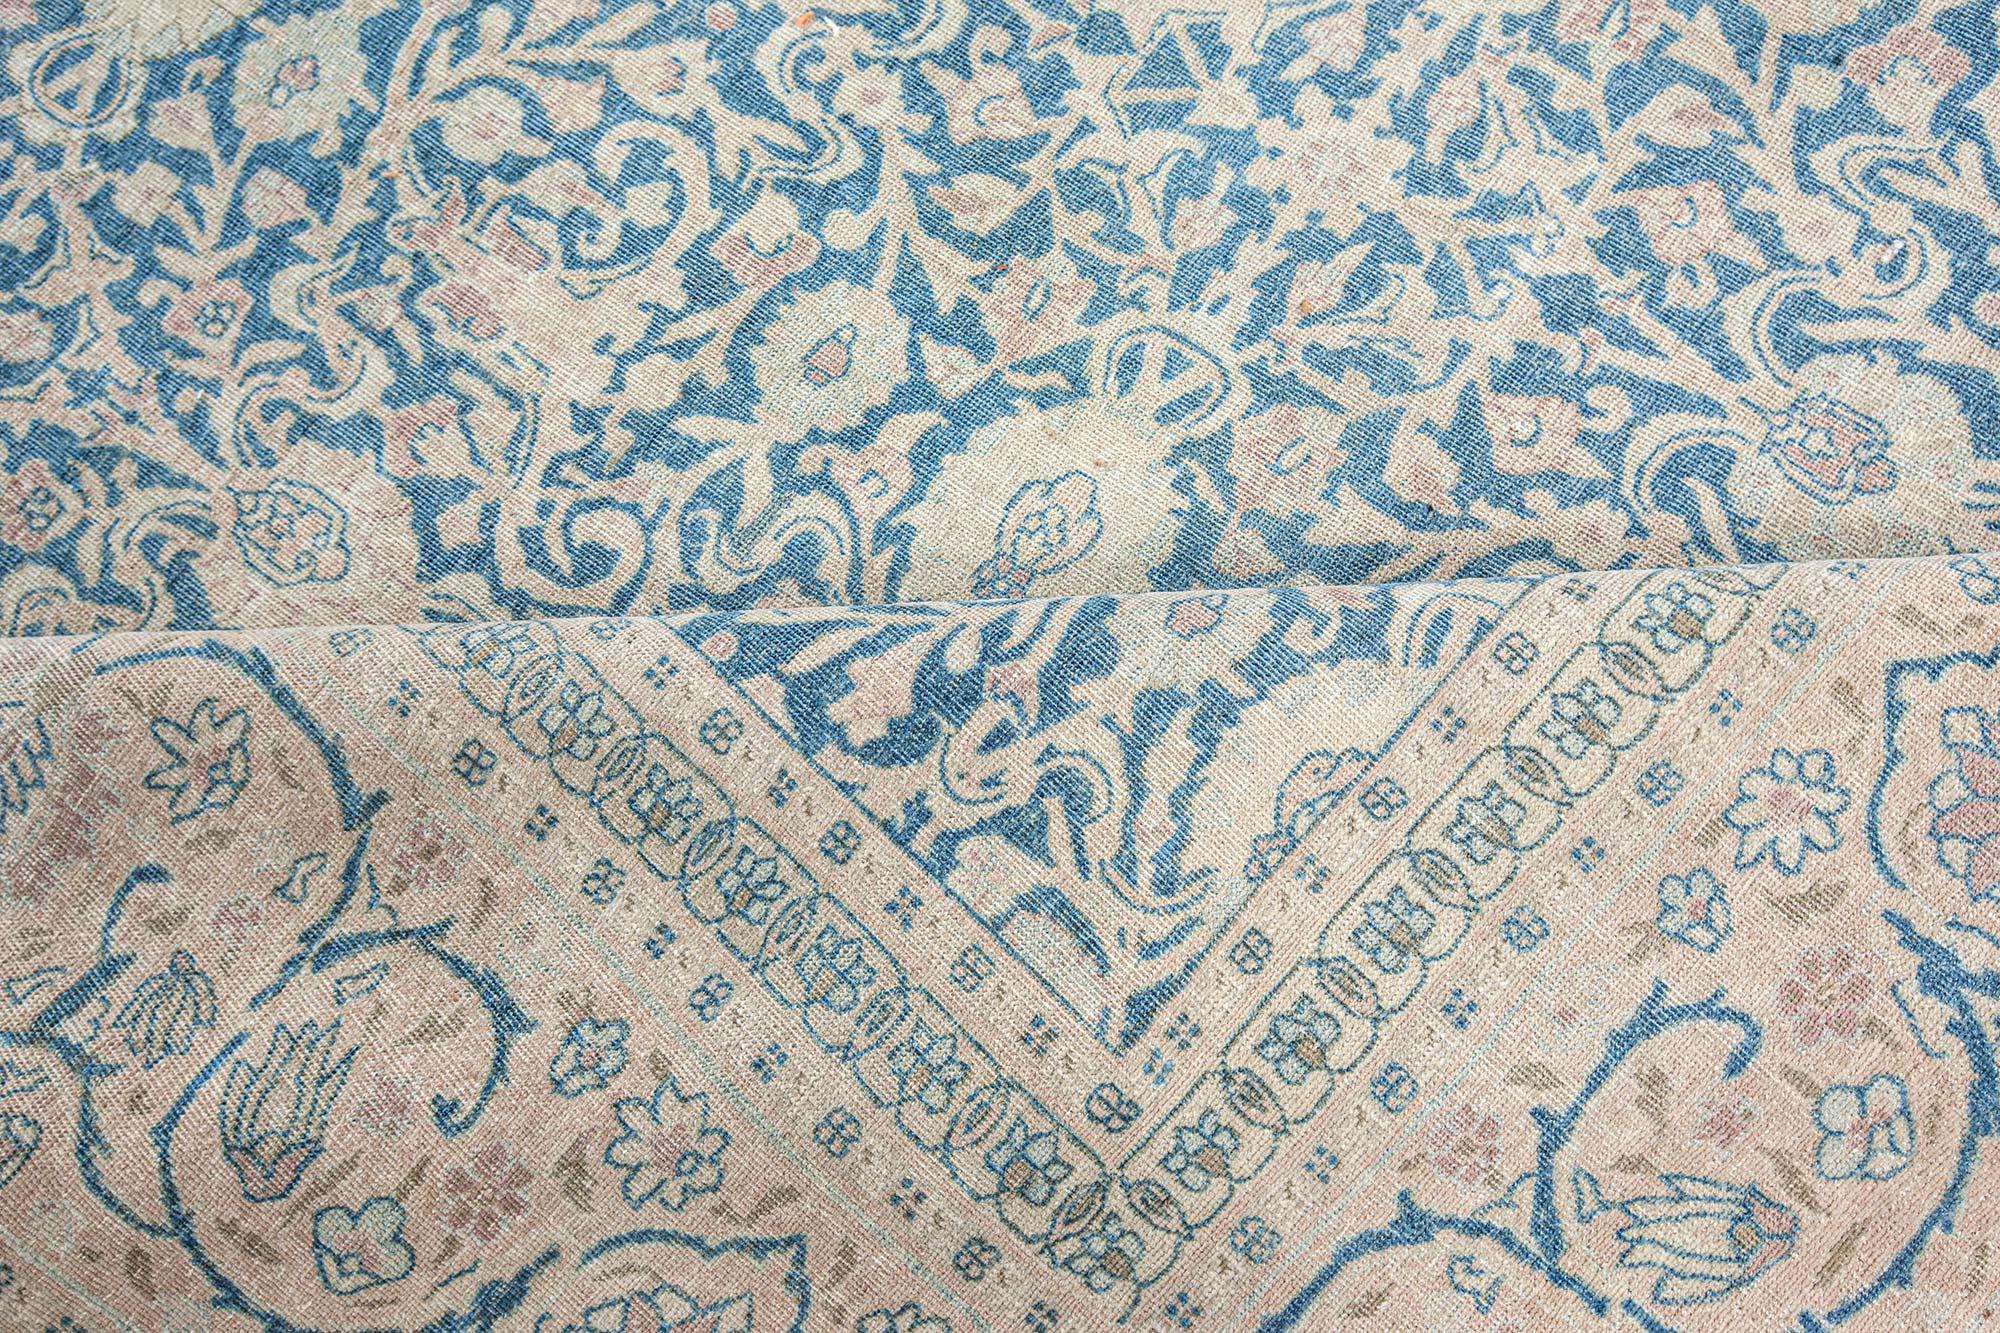 Antique Persian Tabriz rug
Size: 11'0